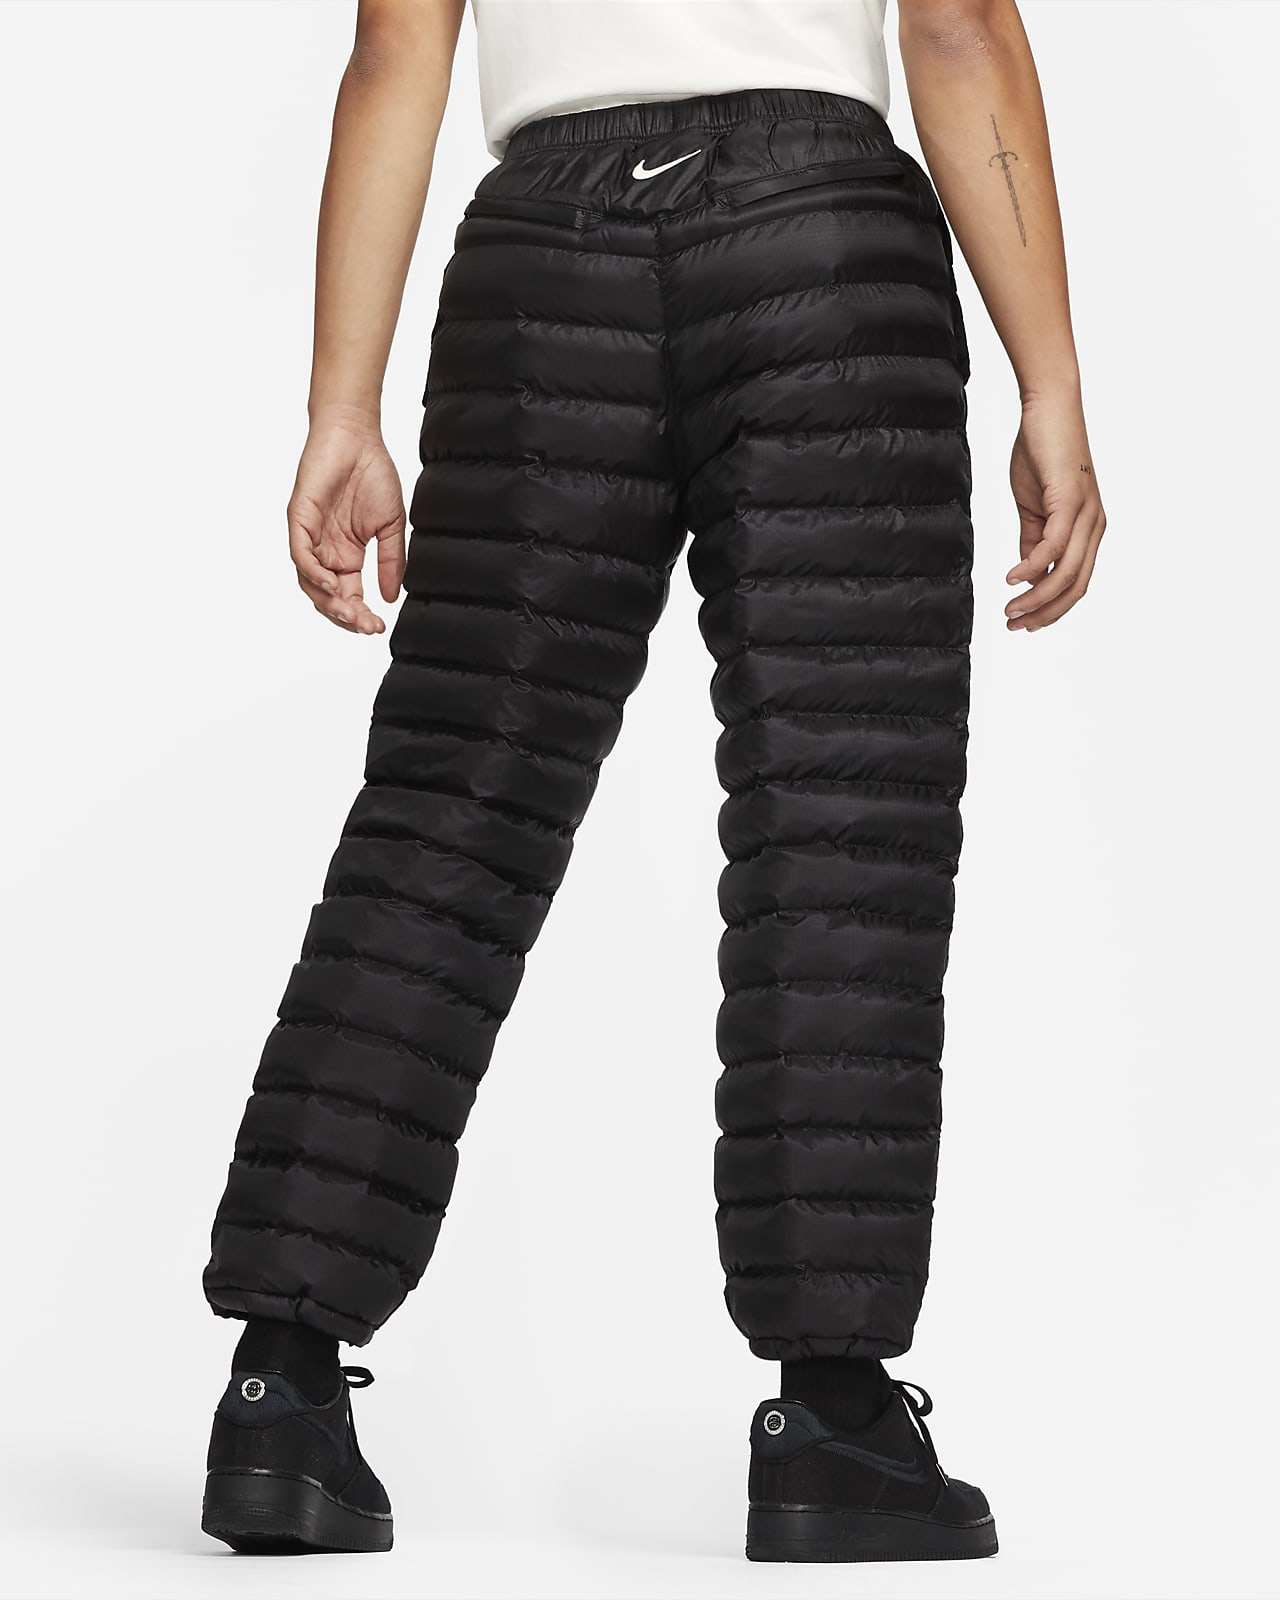 nike insulated leggings